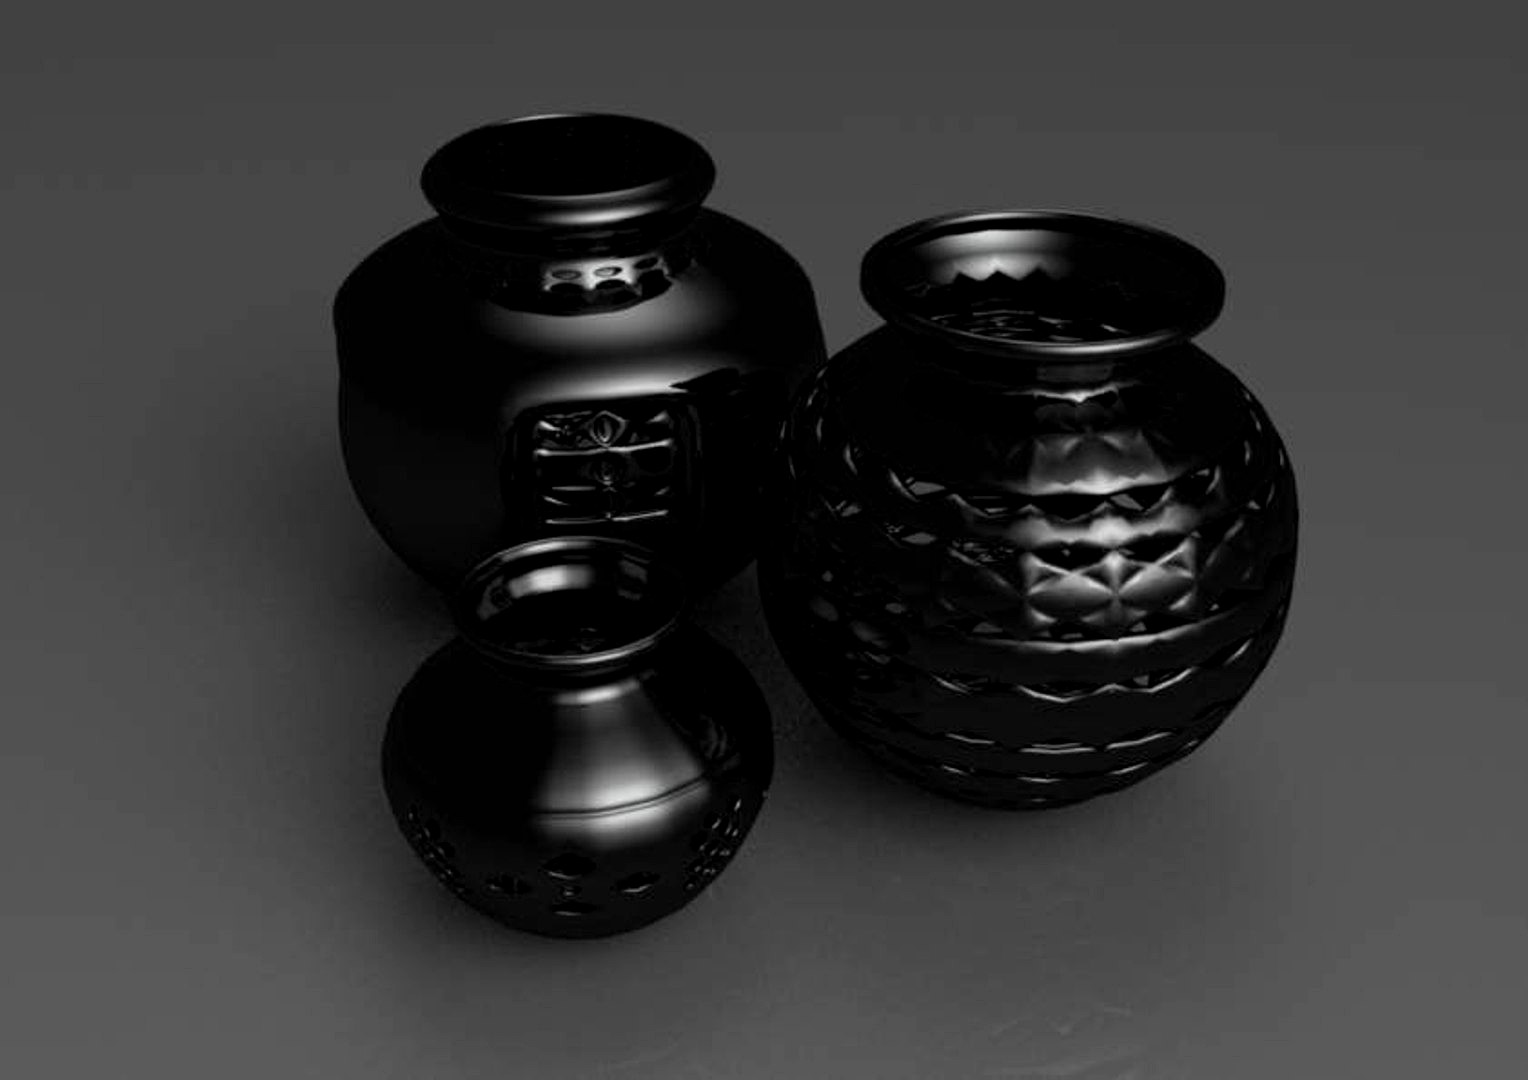 Black Mud Vases from Oaxaca